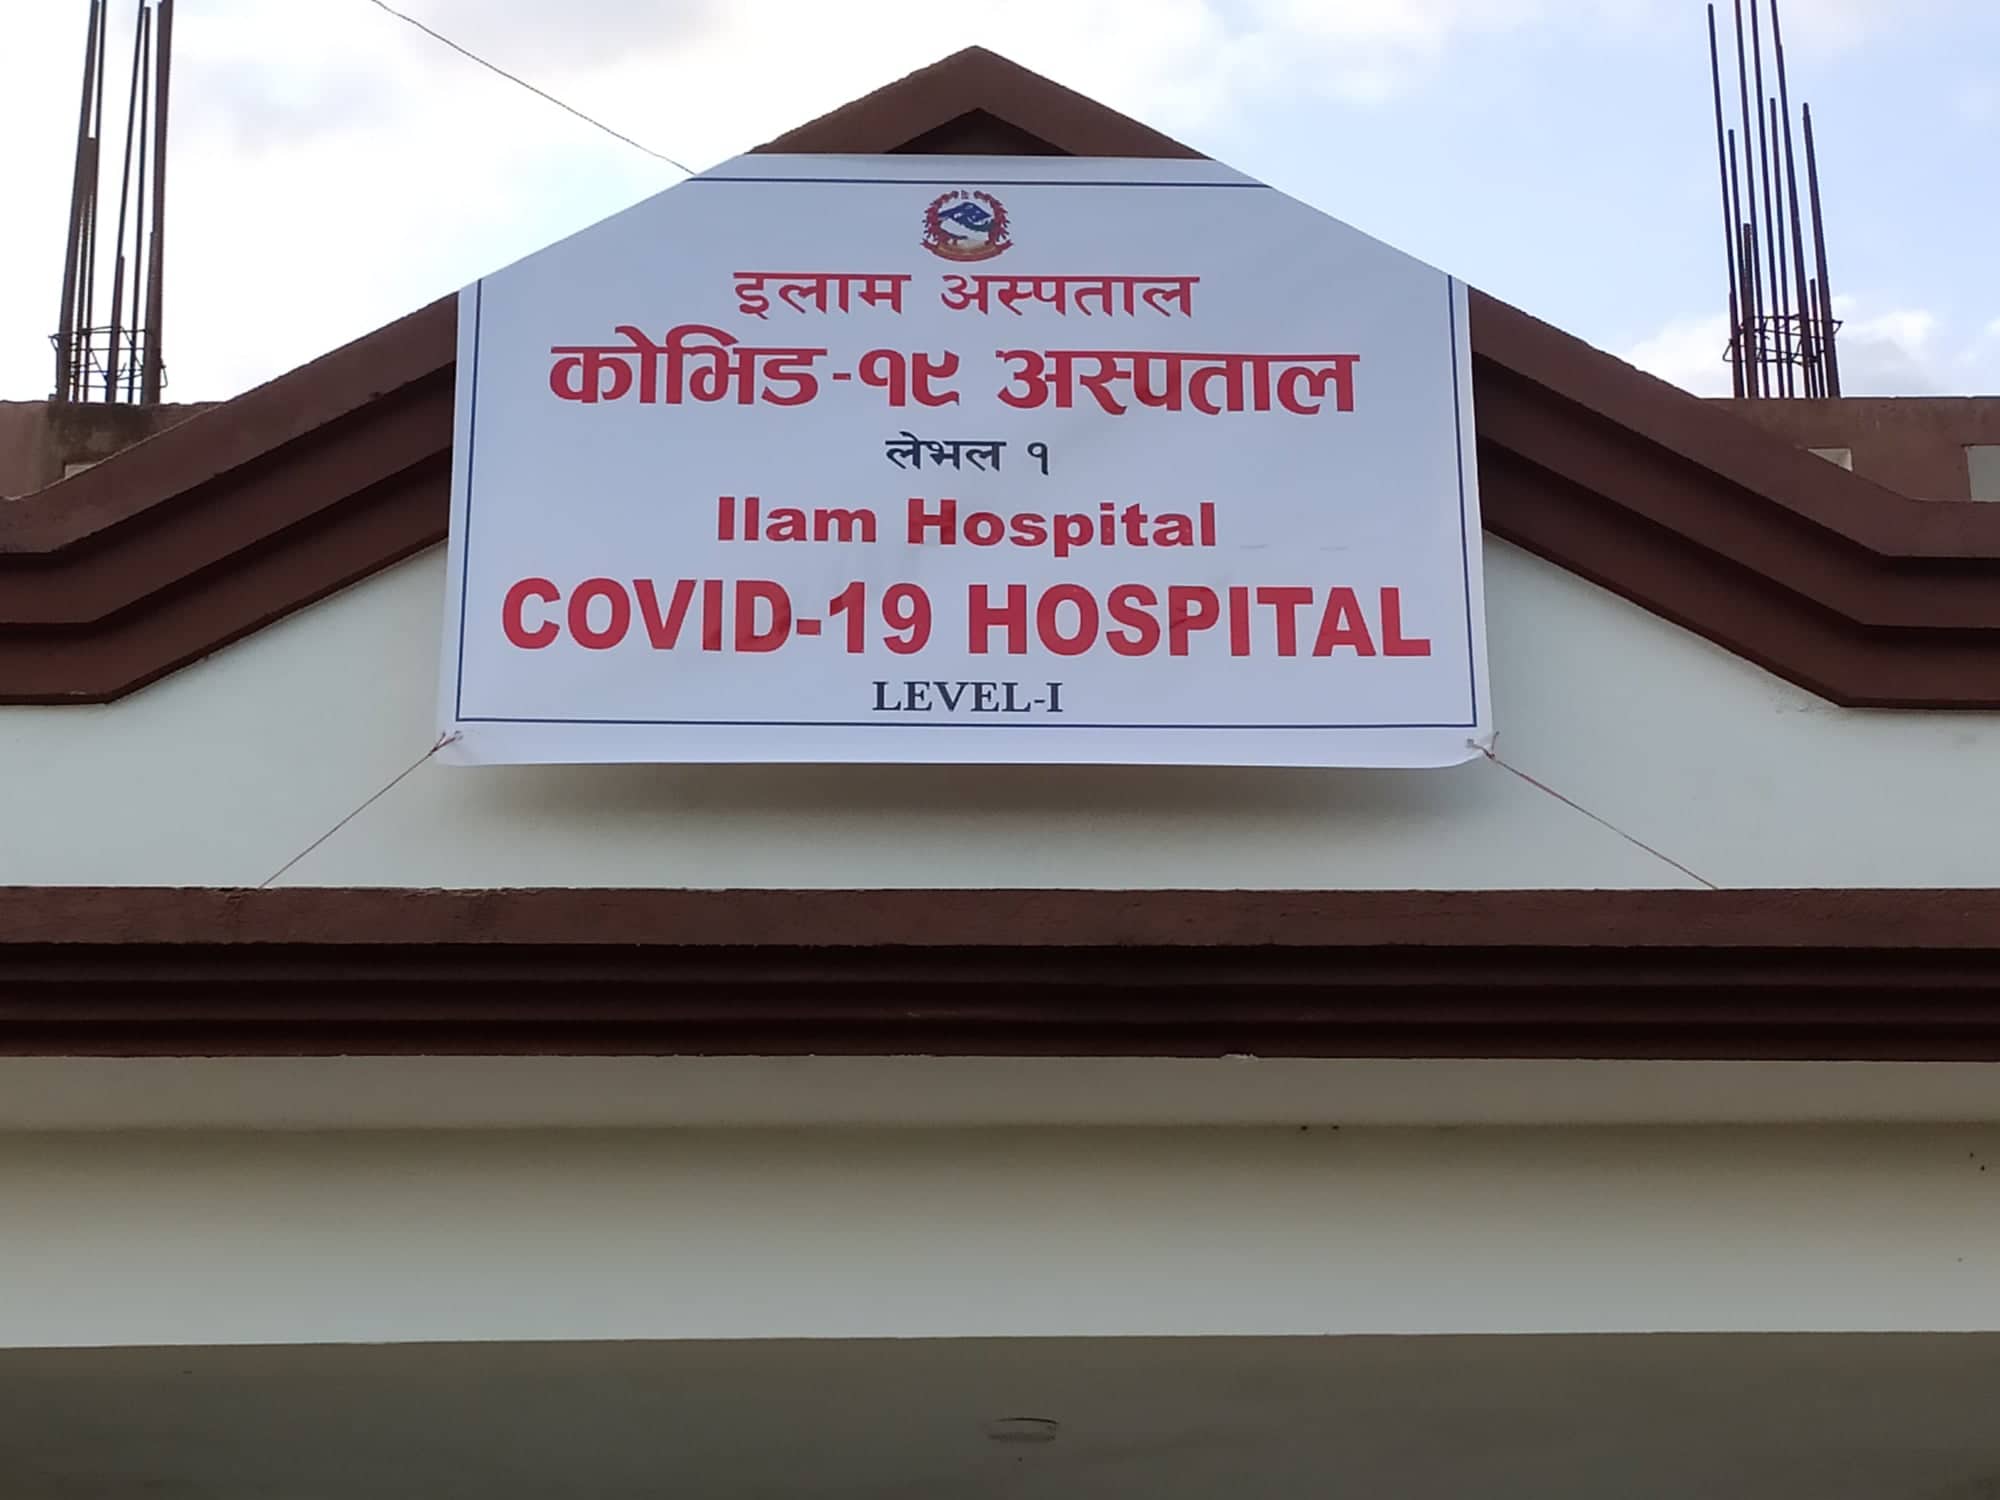 Level 1 Covid-19 temporary hospital in Ilam district. Photo Courtesy: Dr Baibhav Mallik